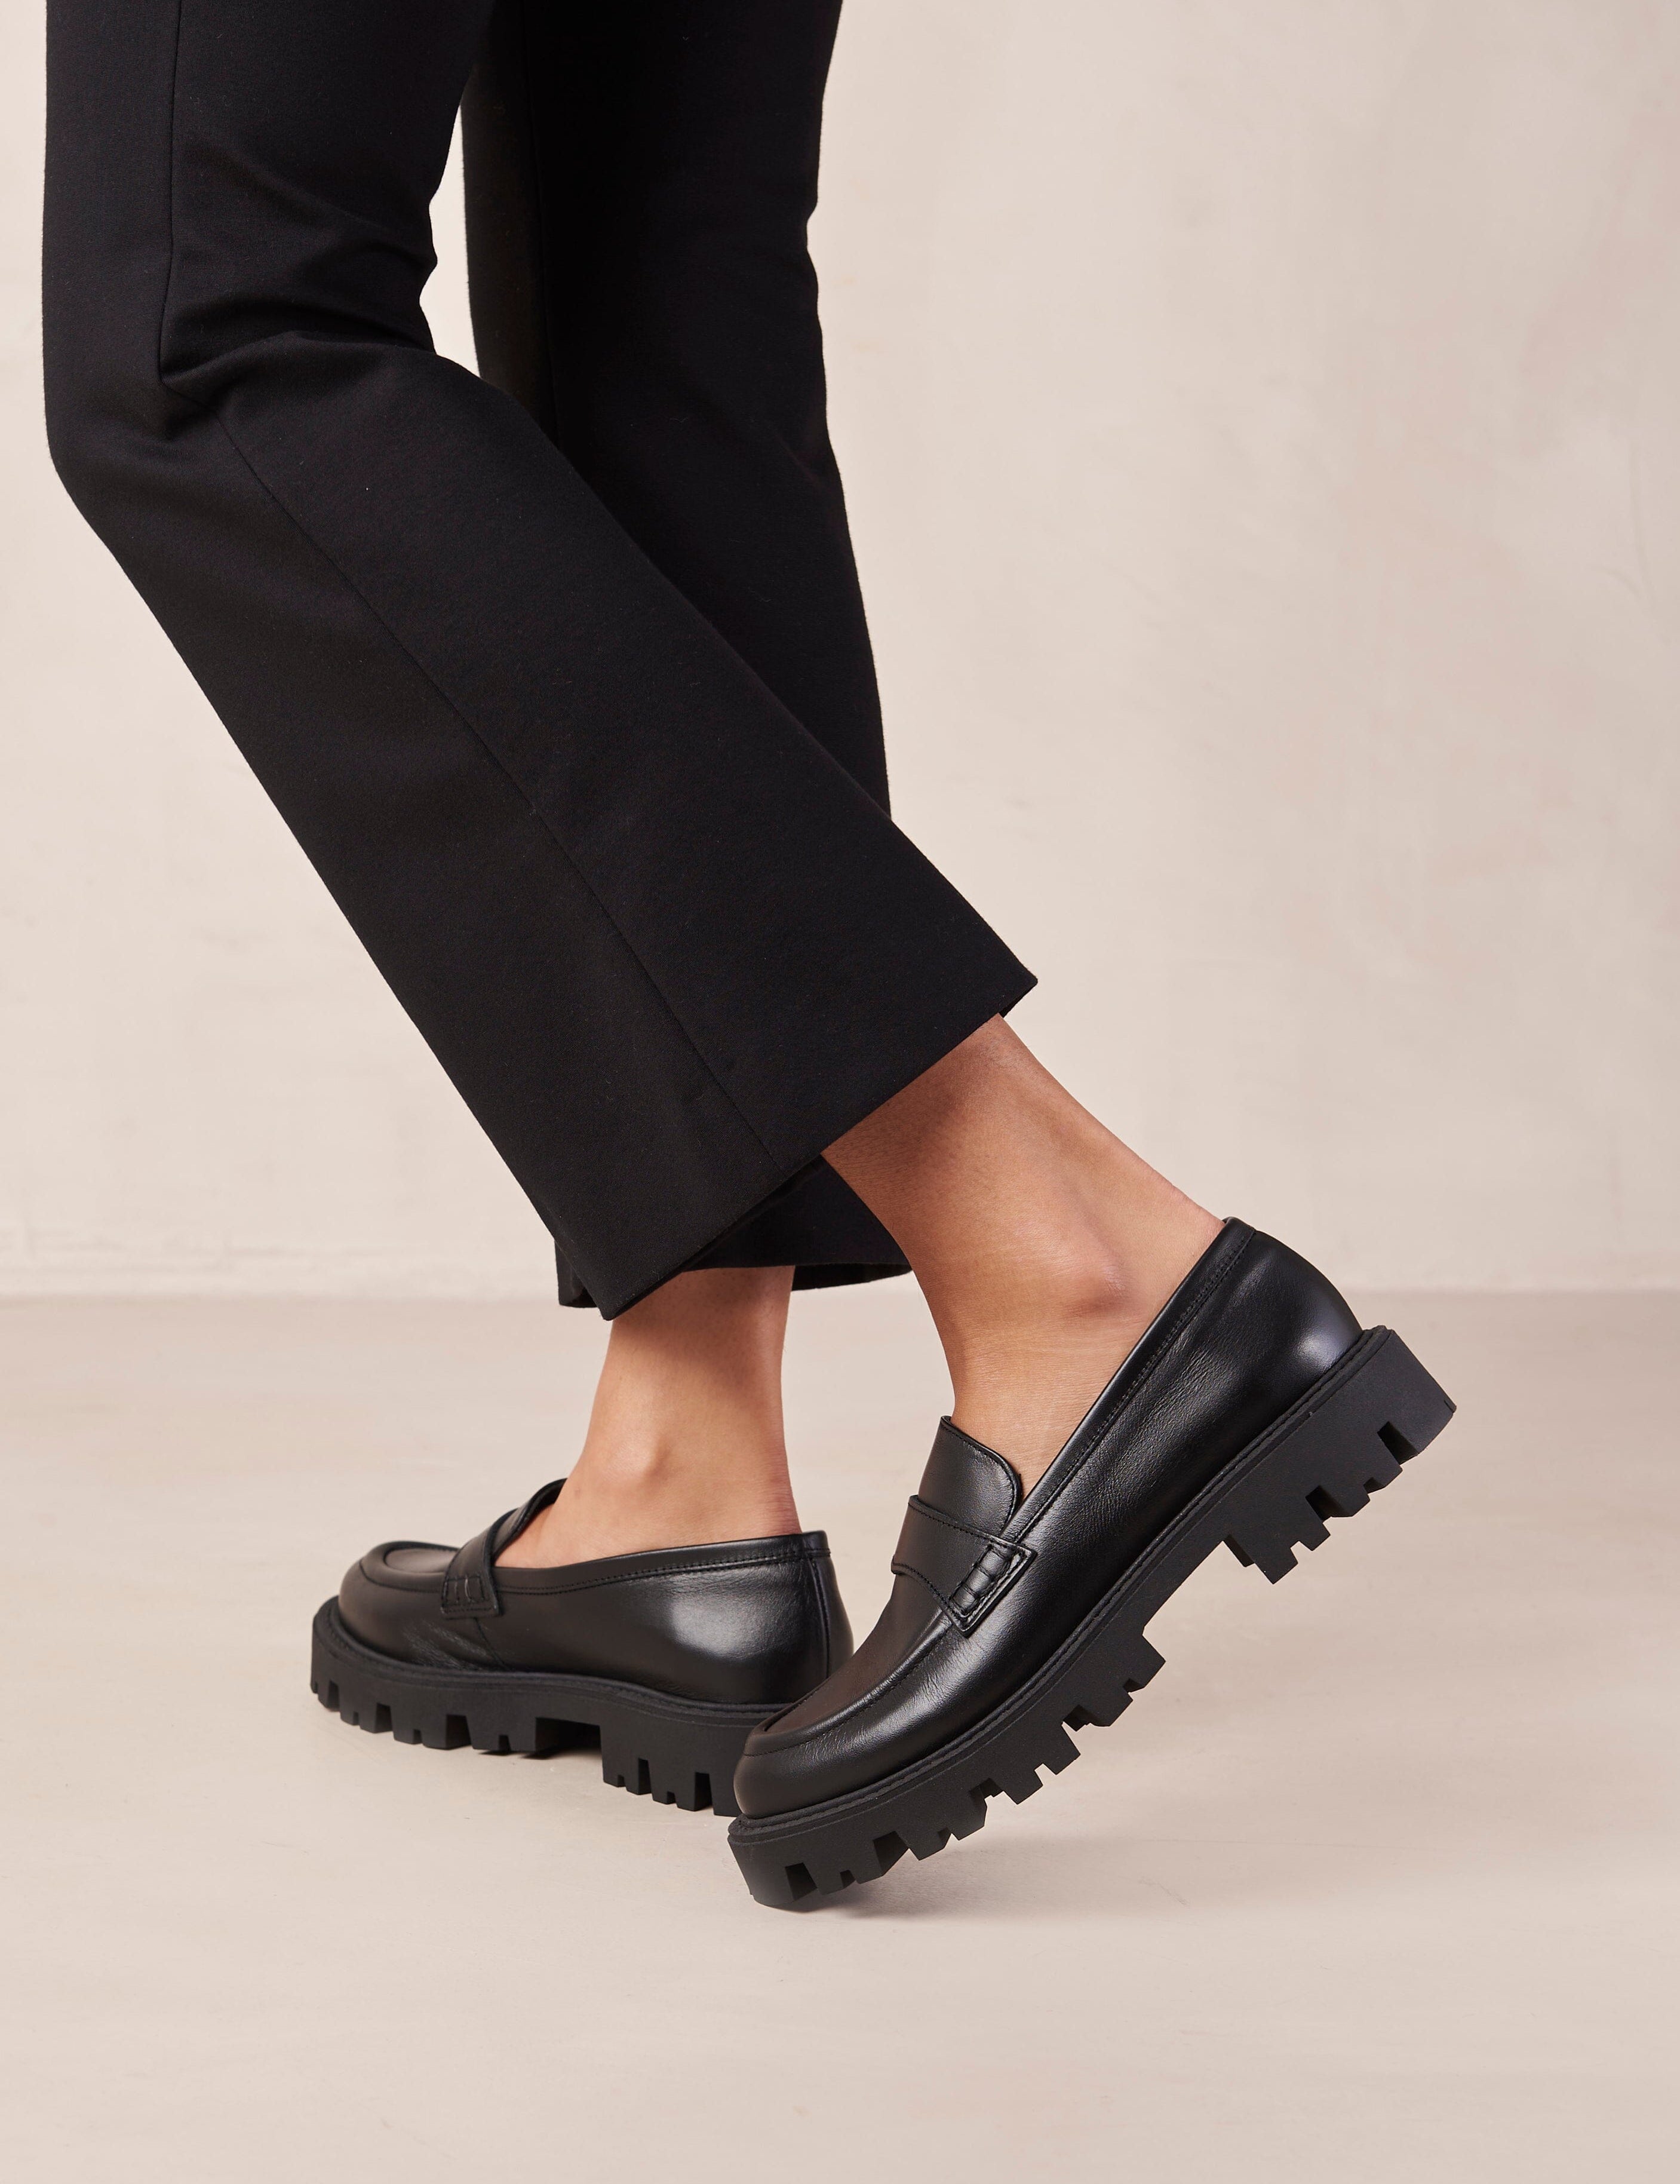 obsidian-black-leather-loafers-loafers-alohas-402797.jpg